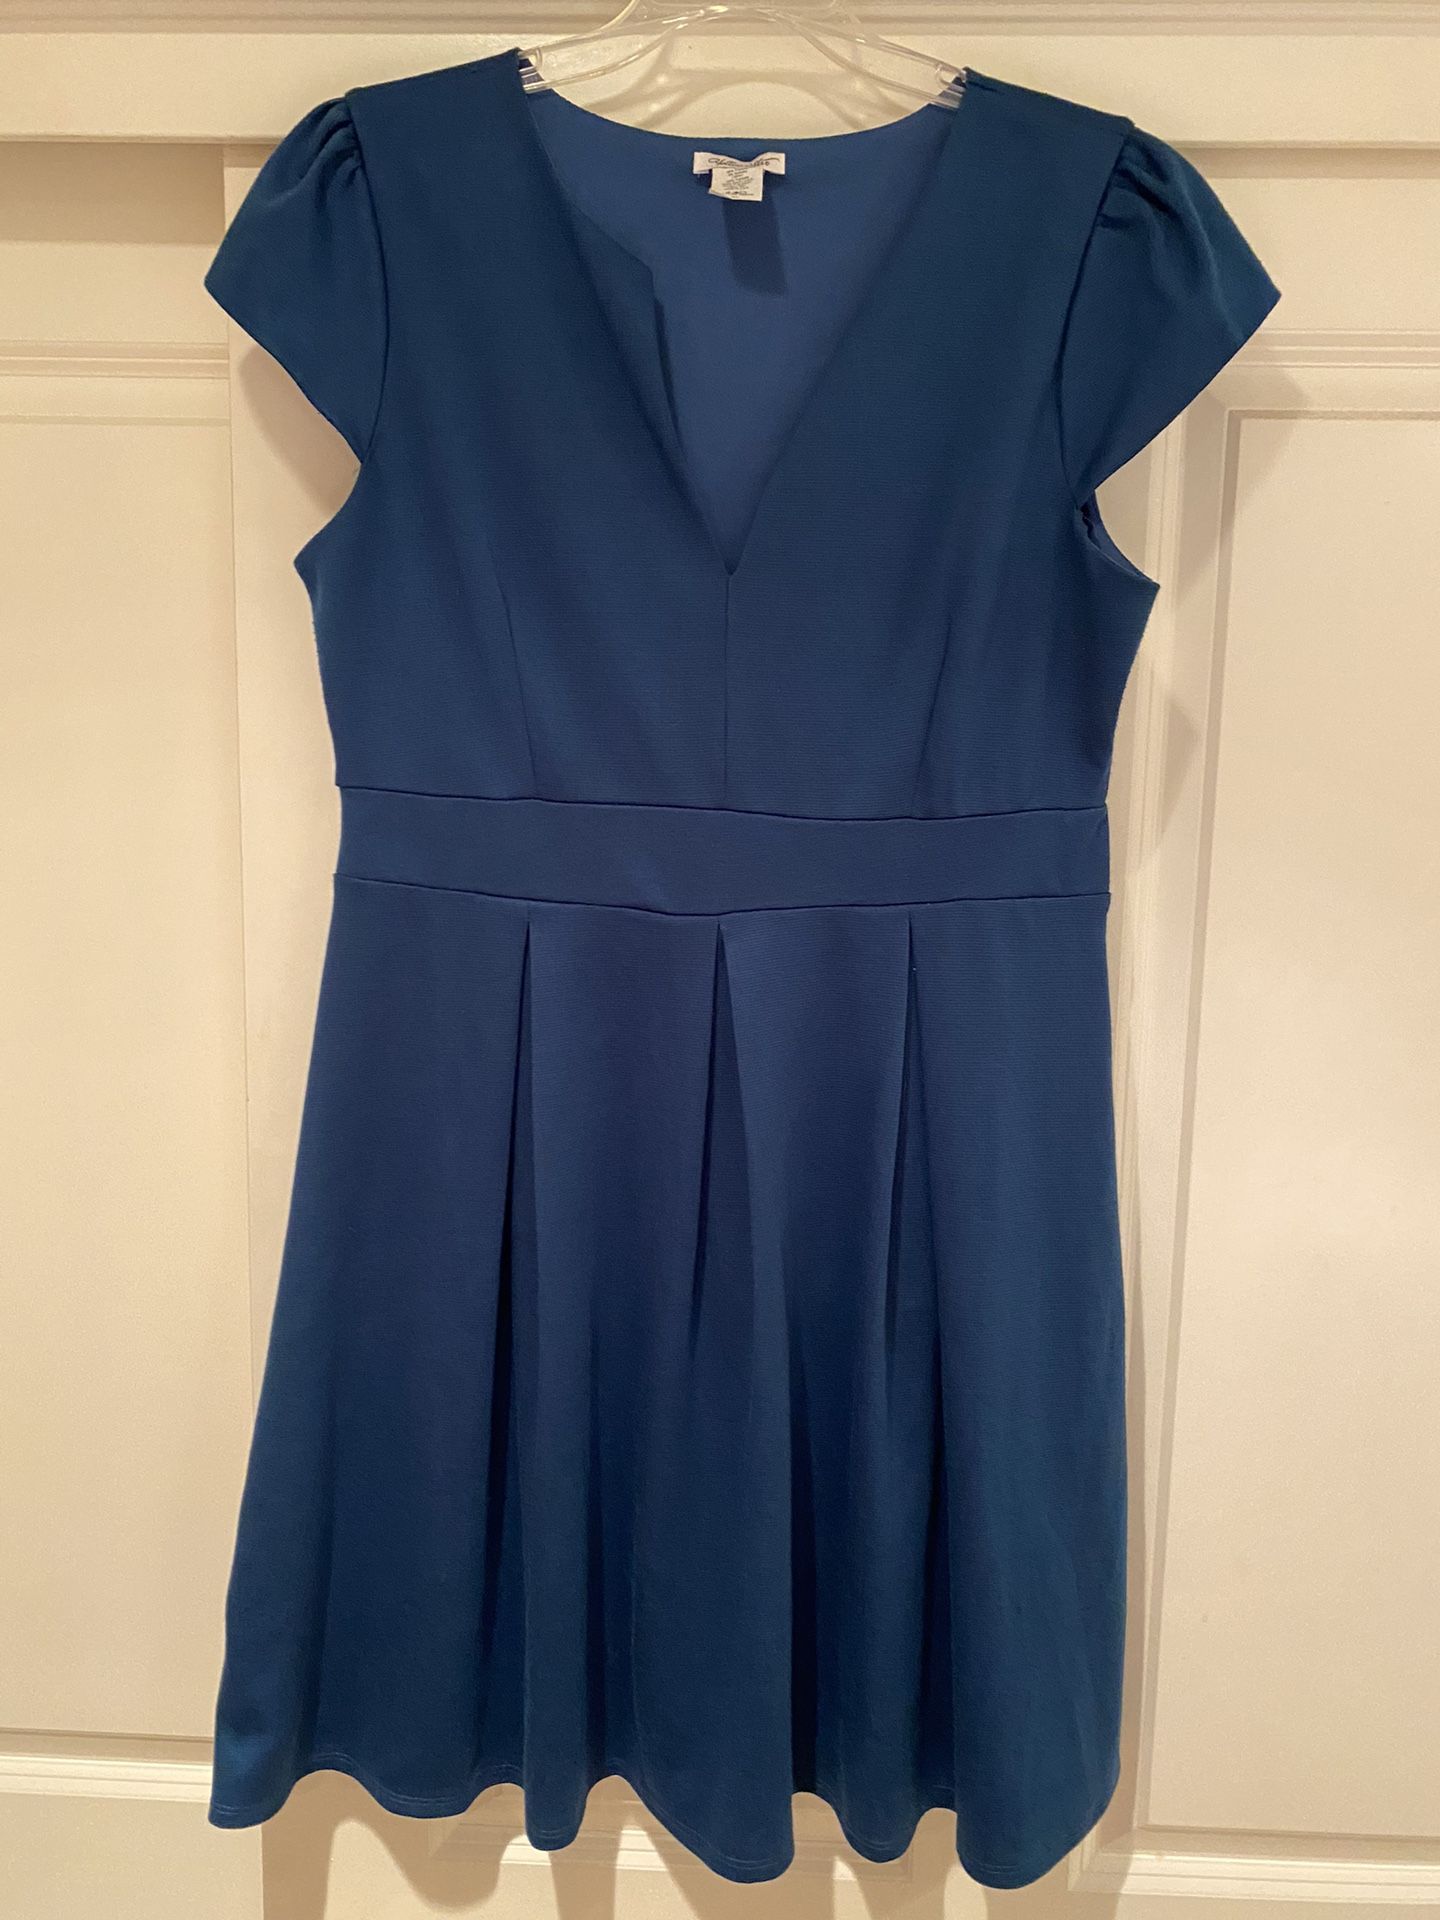 Blue-teal Dress